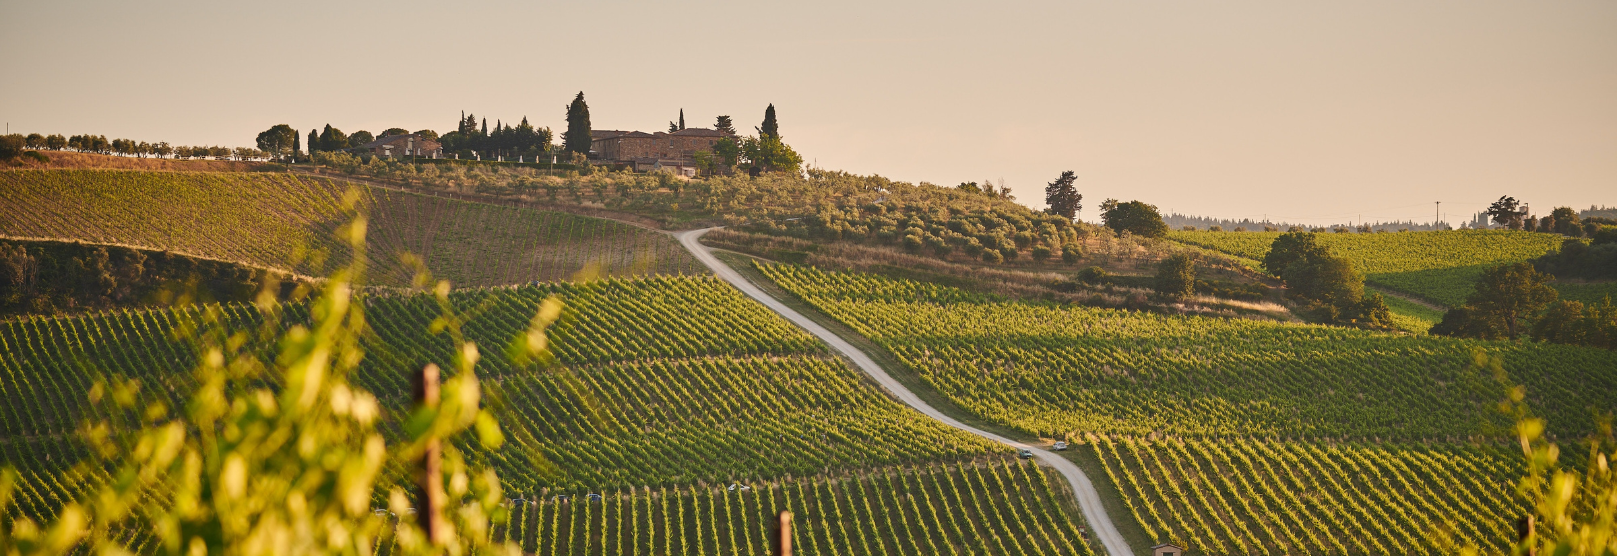 Italian Wine and Harvesting